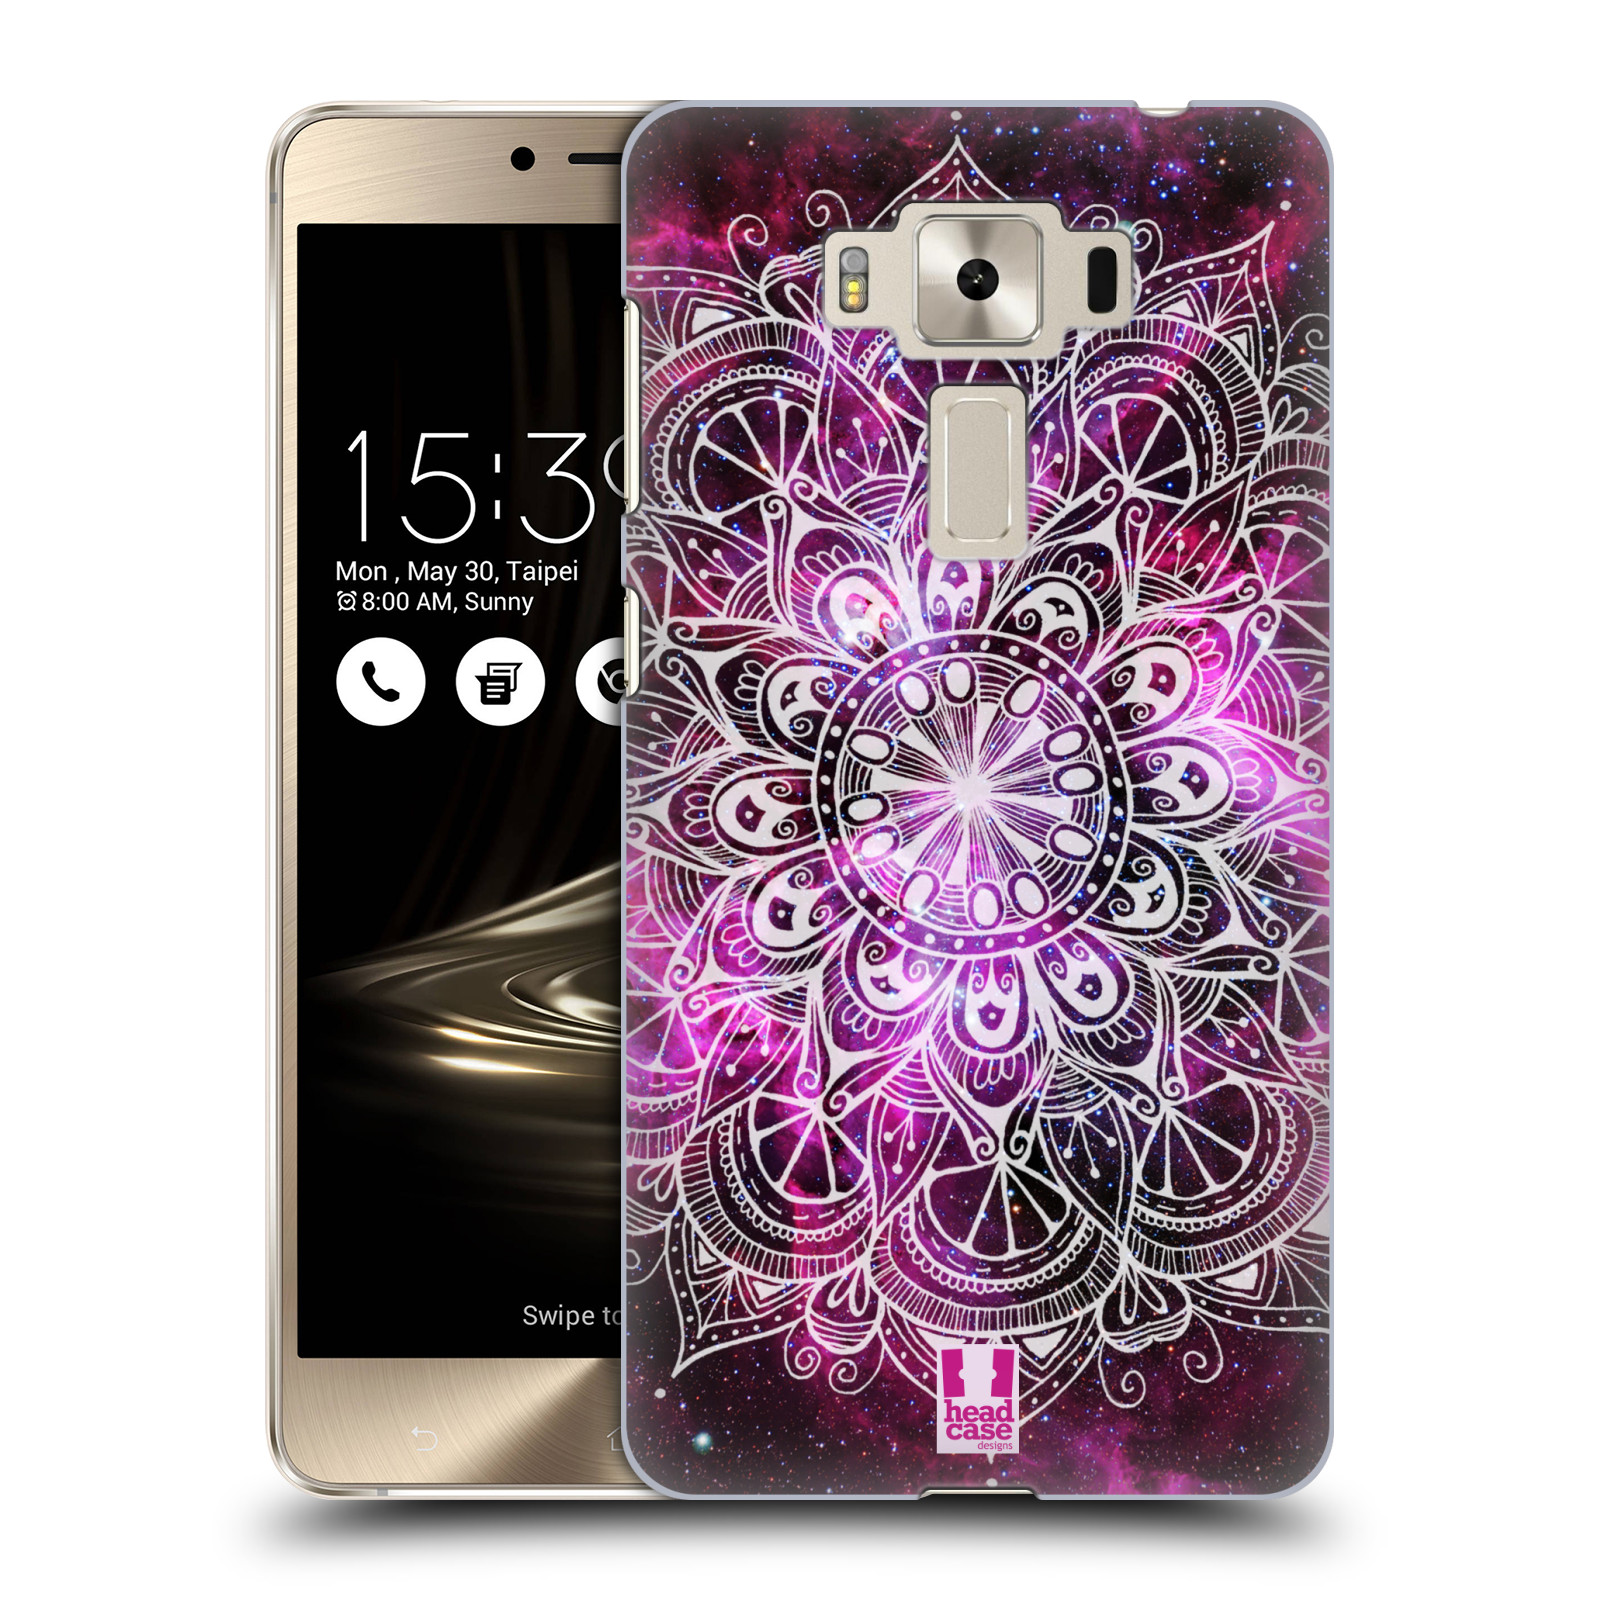 HEAD CASE plastový obal na mobil Asus Zenfone 3 DELUXE ZS550KL vzor Indie Mandala slunce barevná FIALOVÁ MLHOVINA